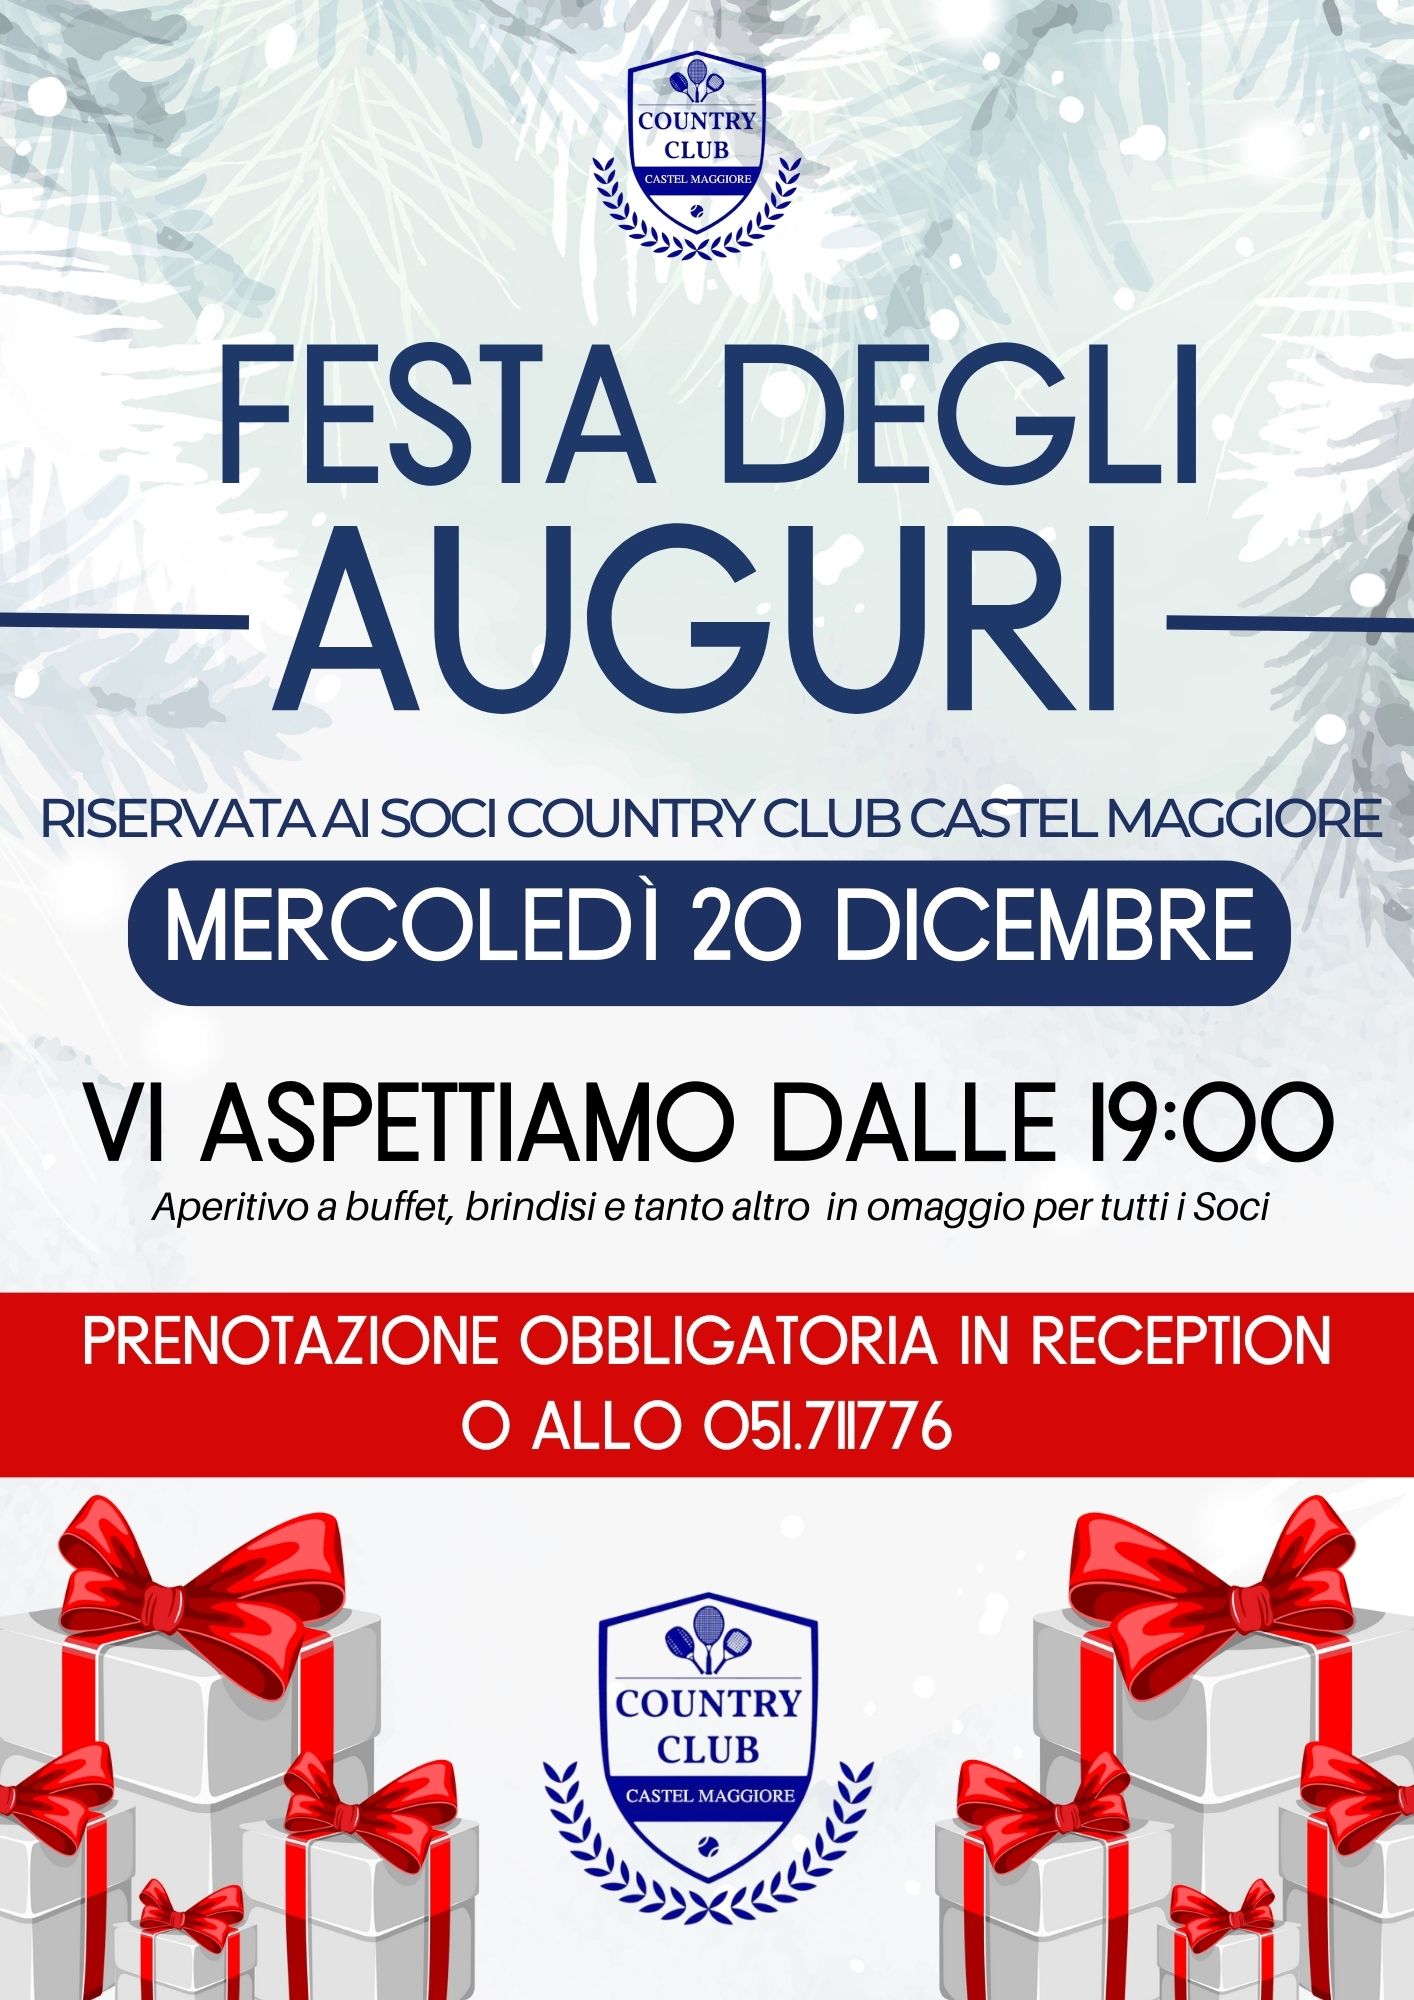 FESTA DEGLI AUGURI - Country Club Bologna